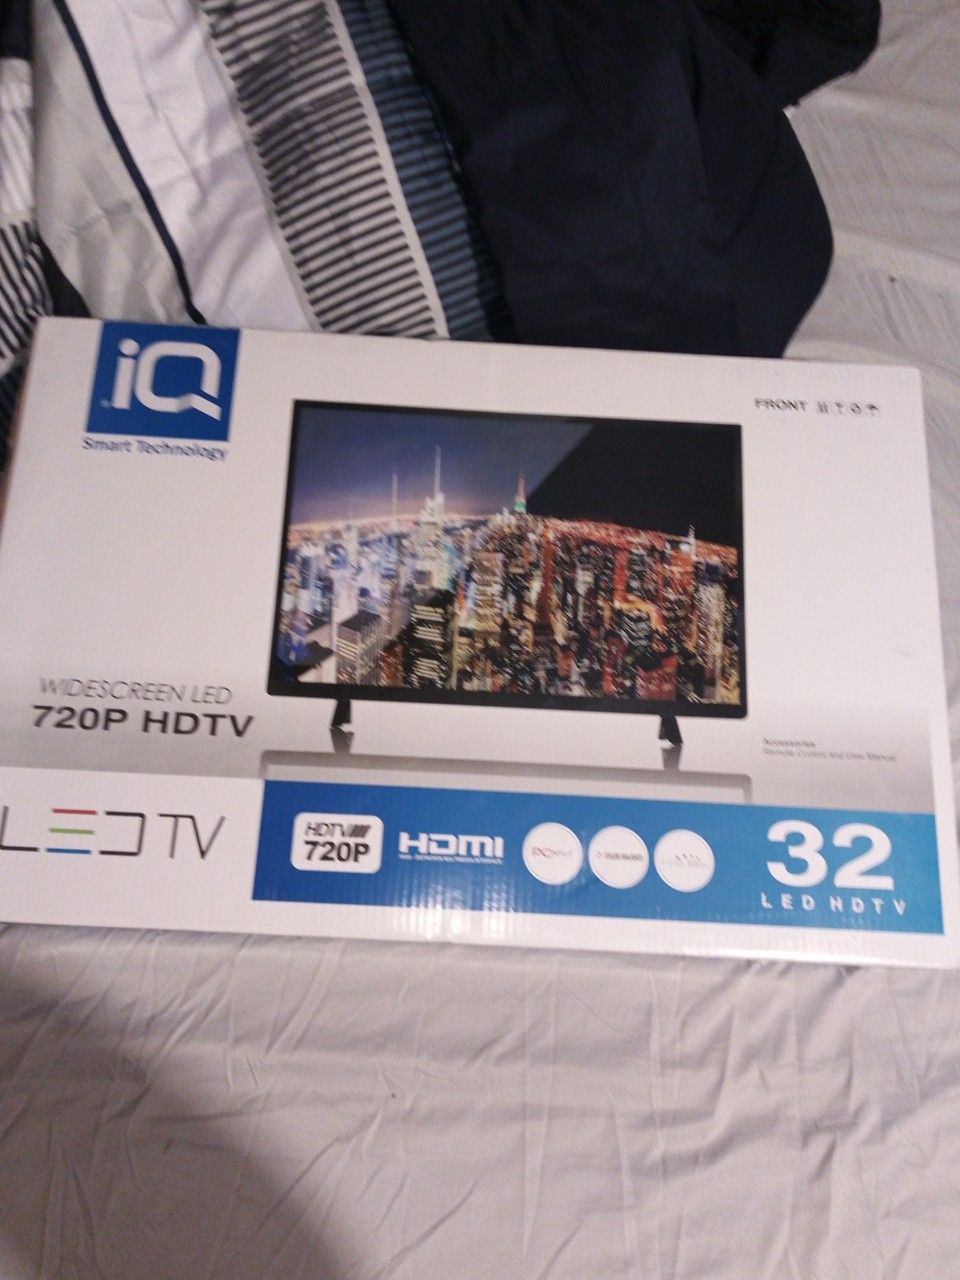 32 inch TV